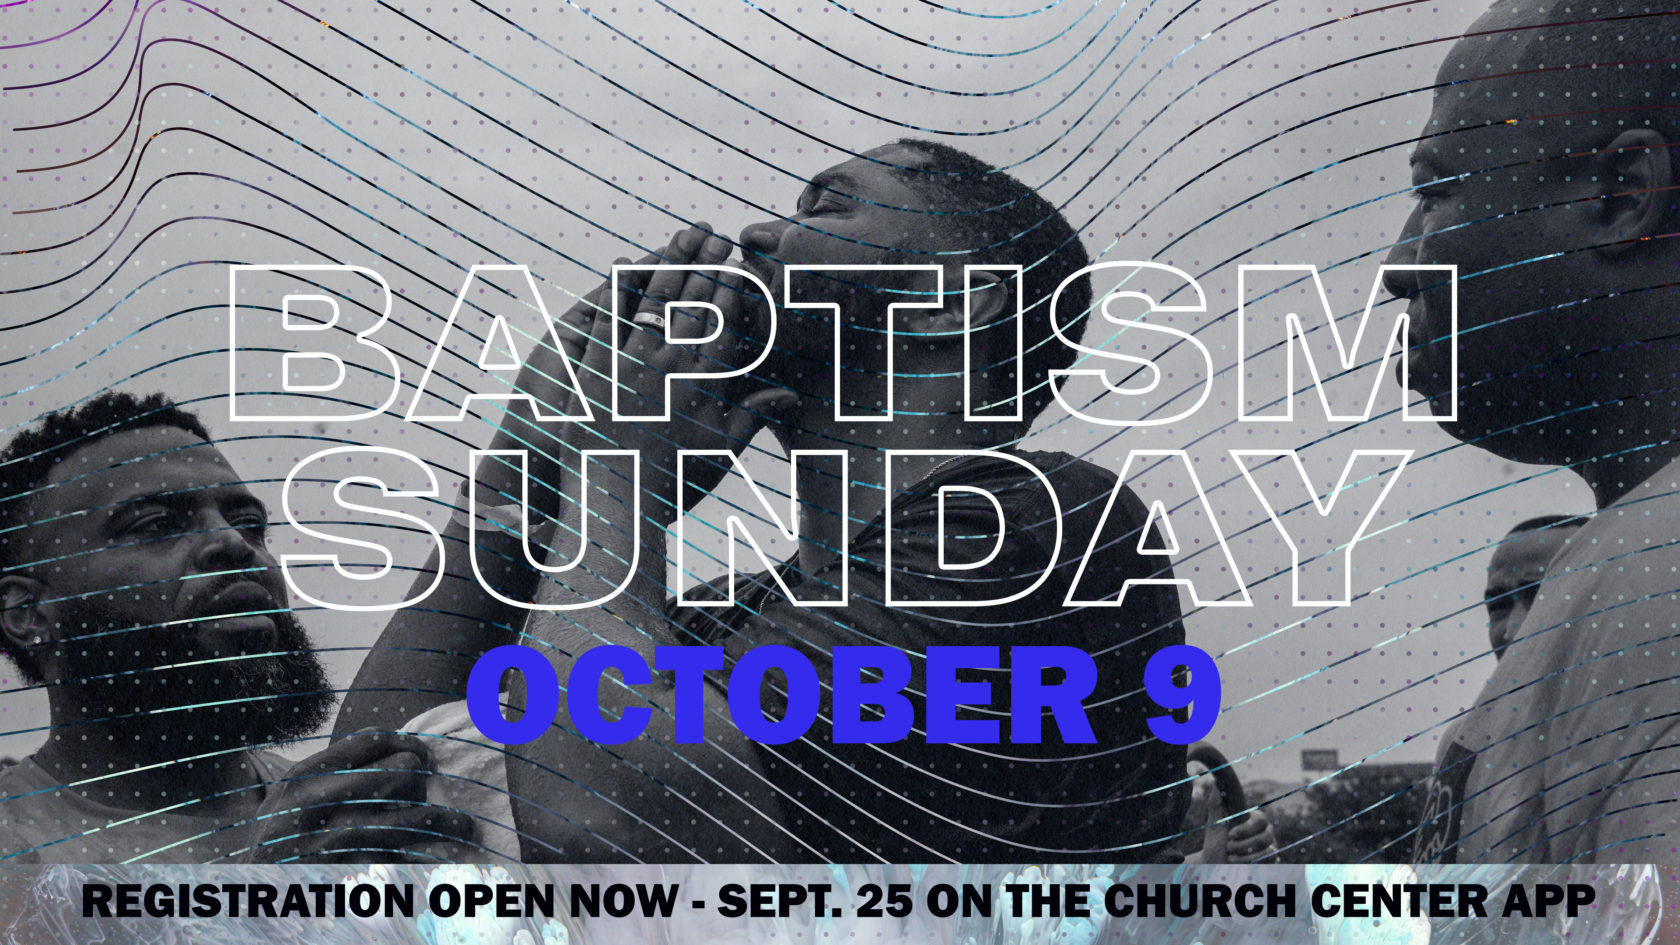 Fall Baptism Sunday